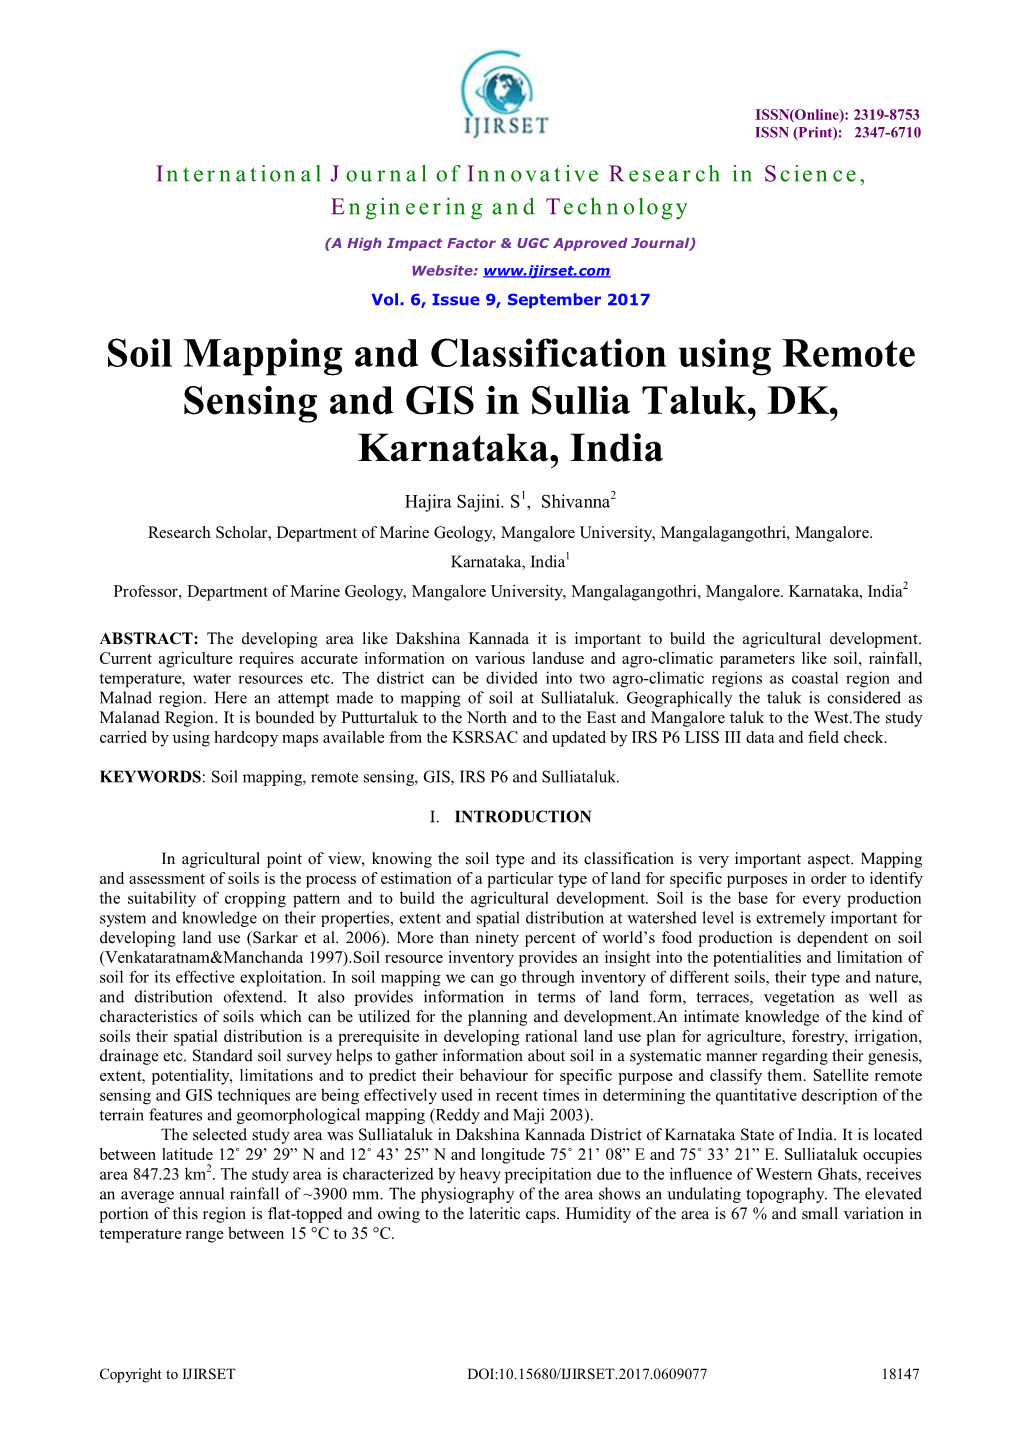 Soil Mapping and Classification Using Remote Sensing and GIS in Sullia Taluk, DK, Karnataka, India